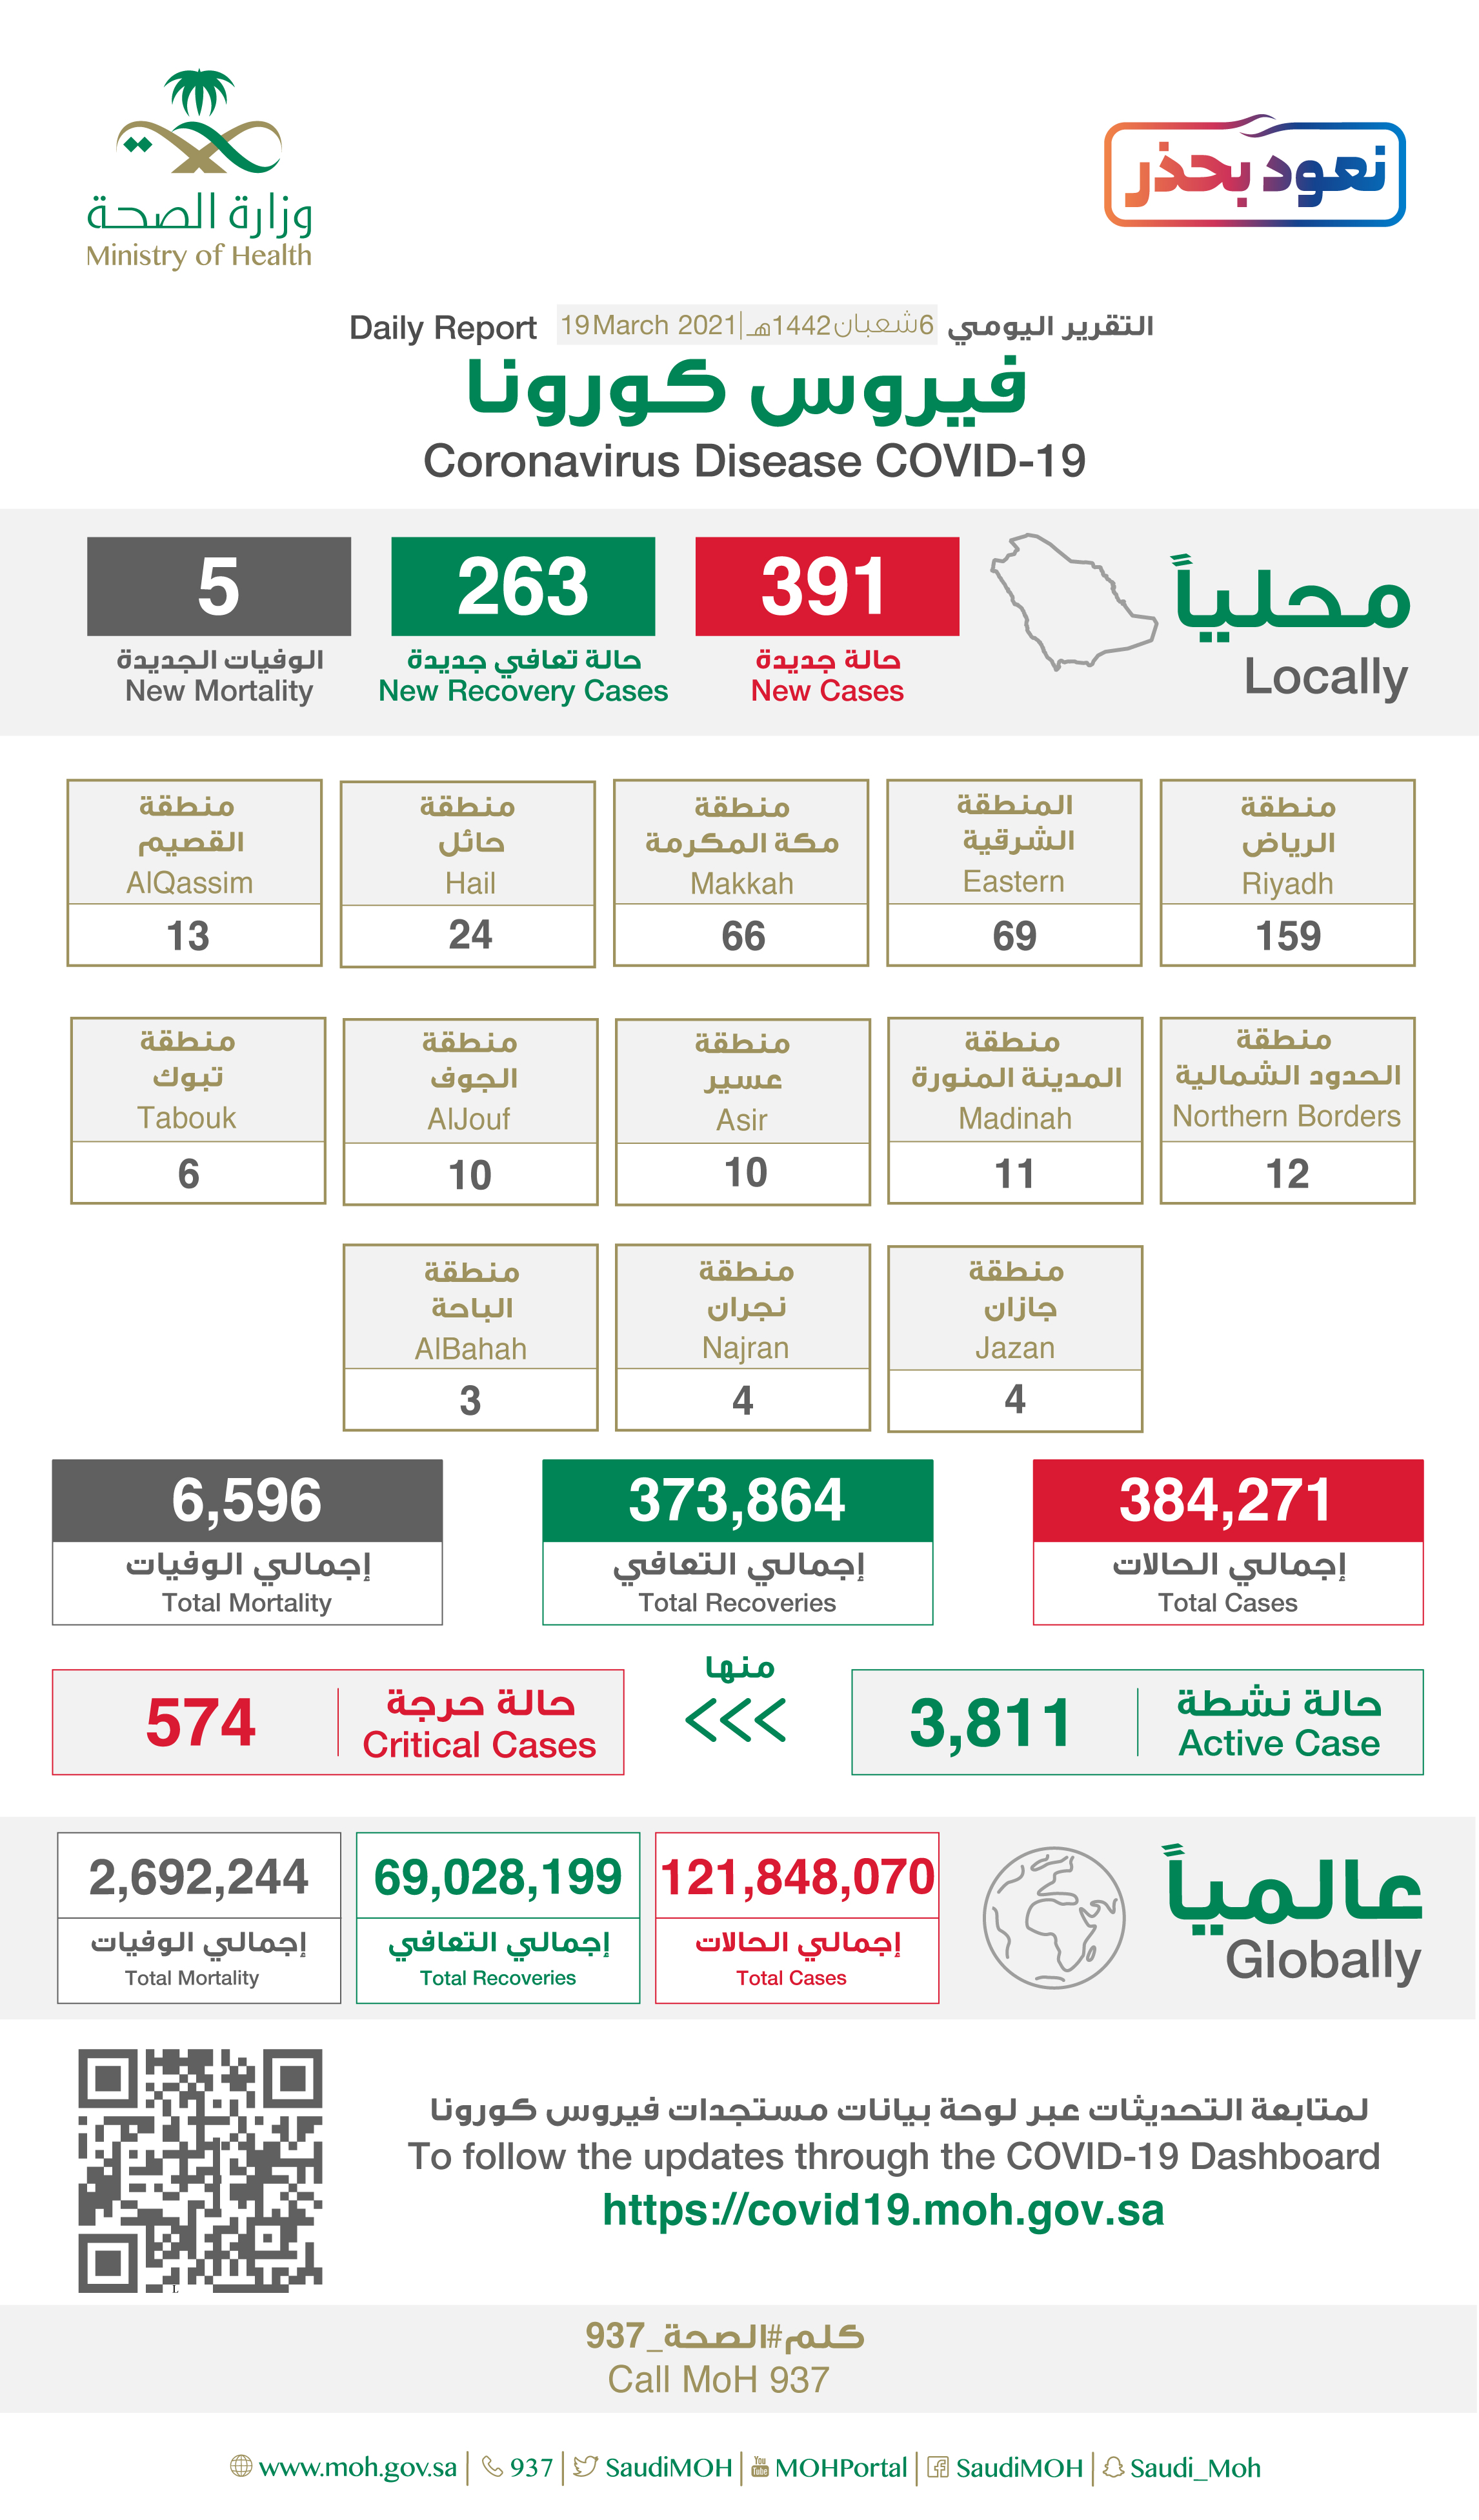 Saudi Arabia Coronavirus : Total Cases :384,271 , New Cases : 391, Cured : 373,864 , Deaths: 6,596, Active Cases : 3,811